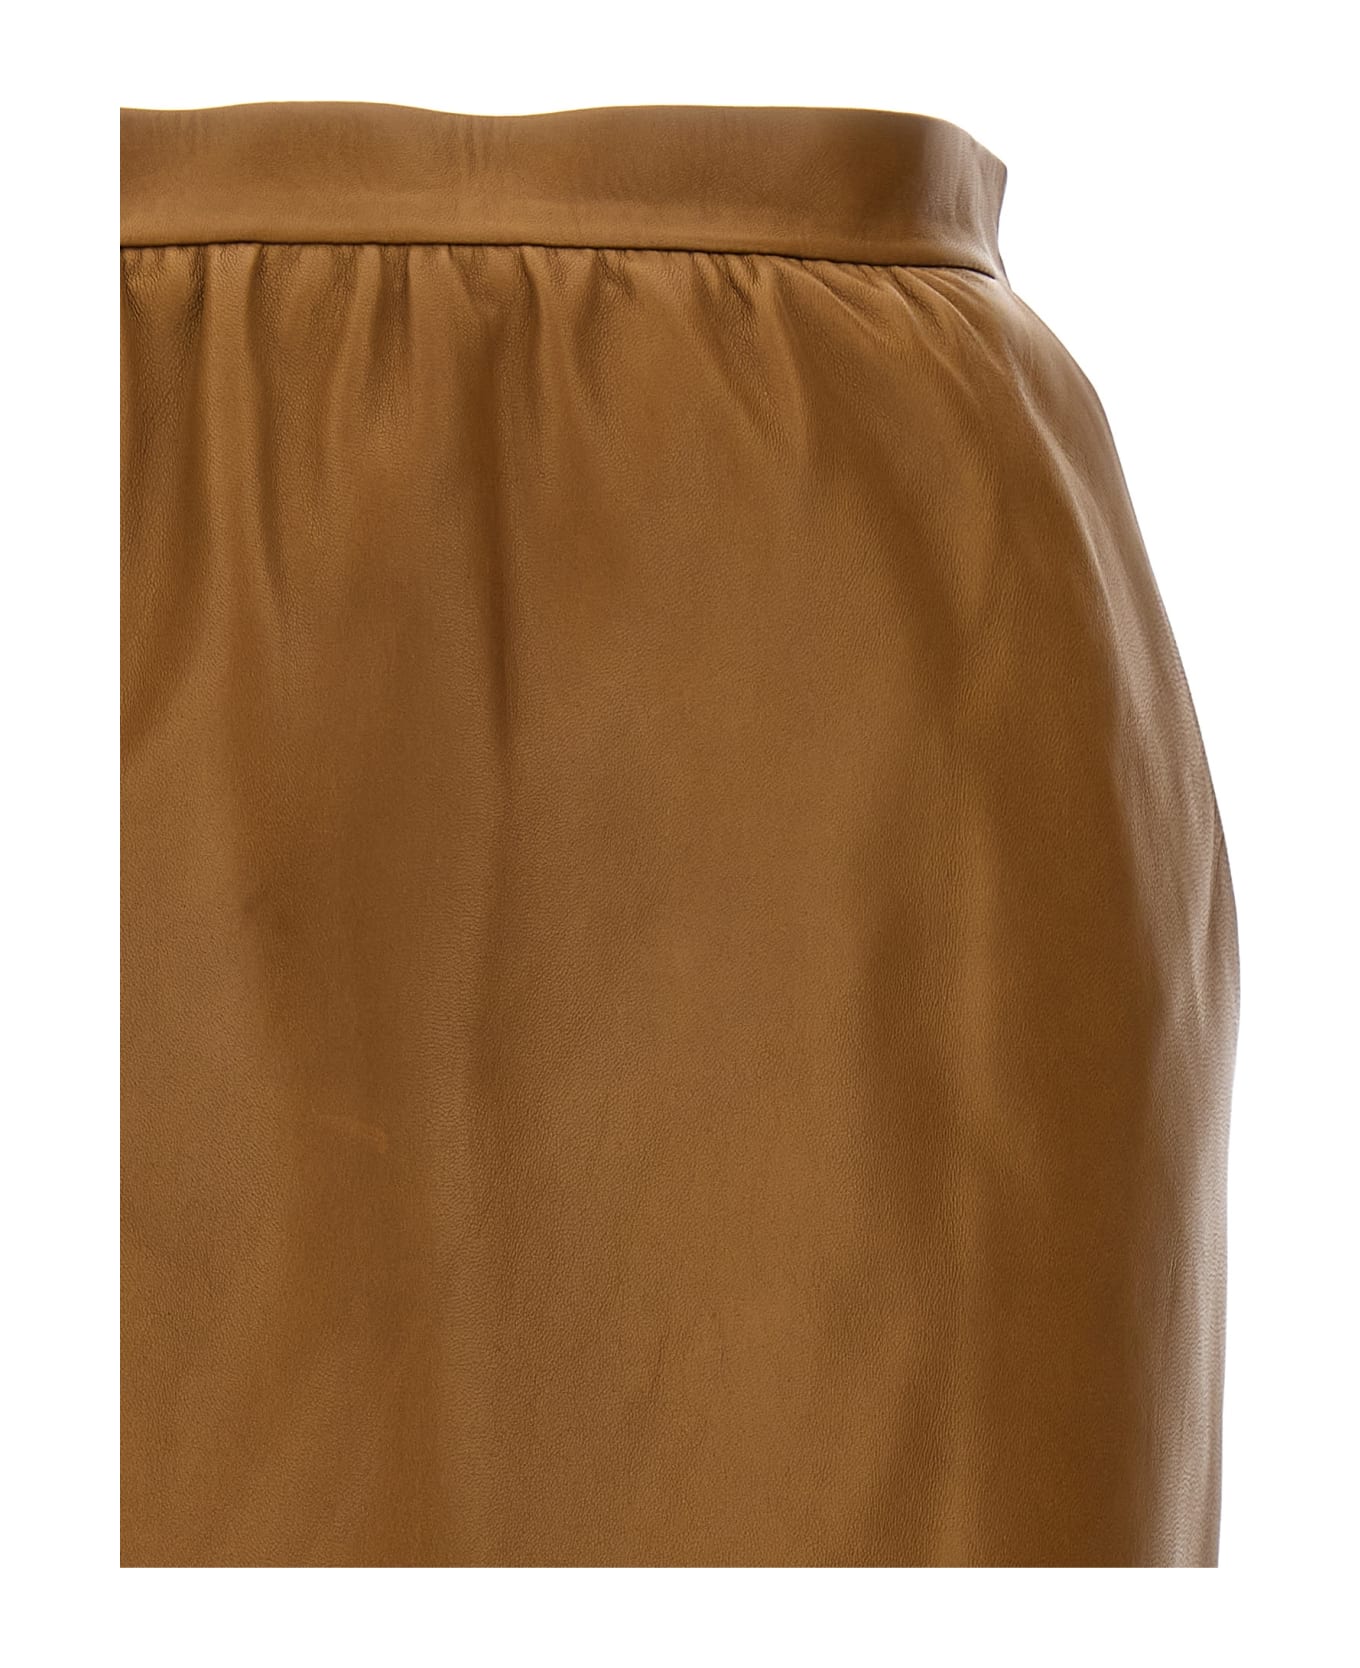 Saint Laurent Leather Skirt - Brown